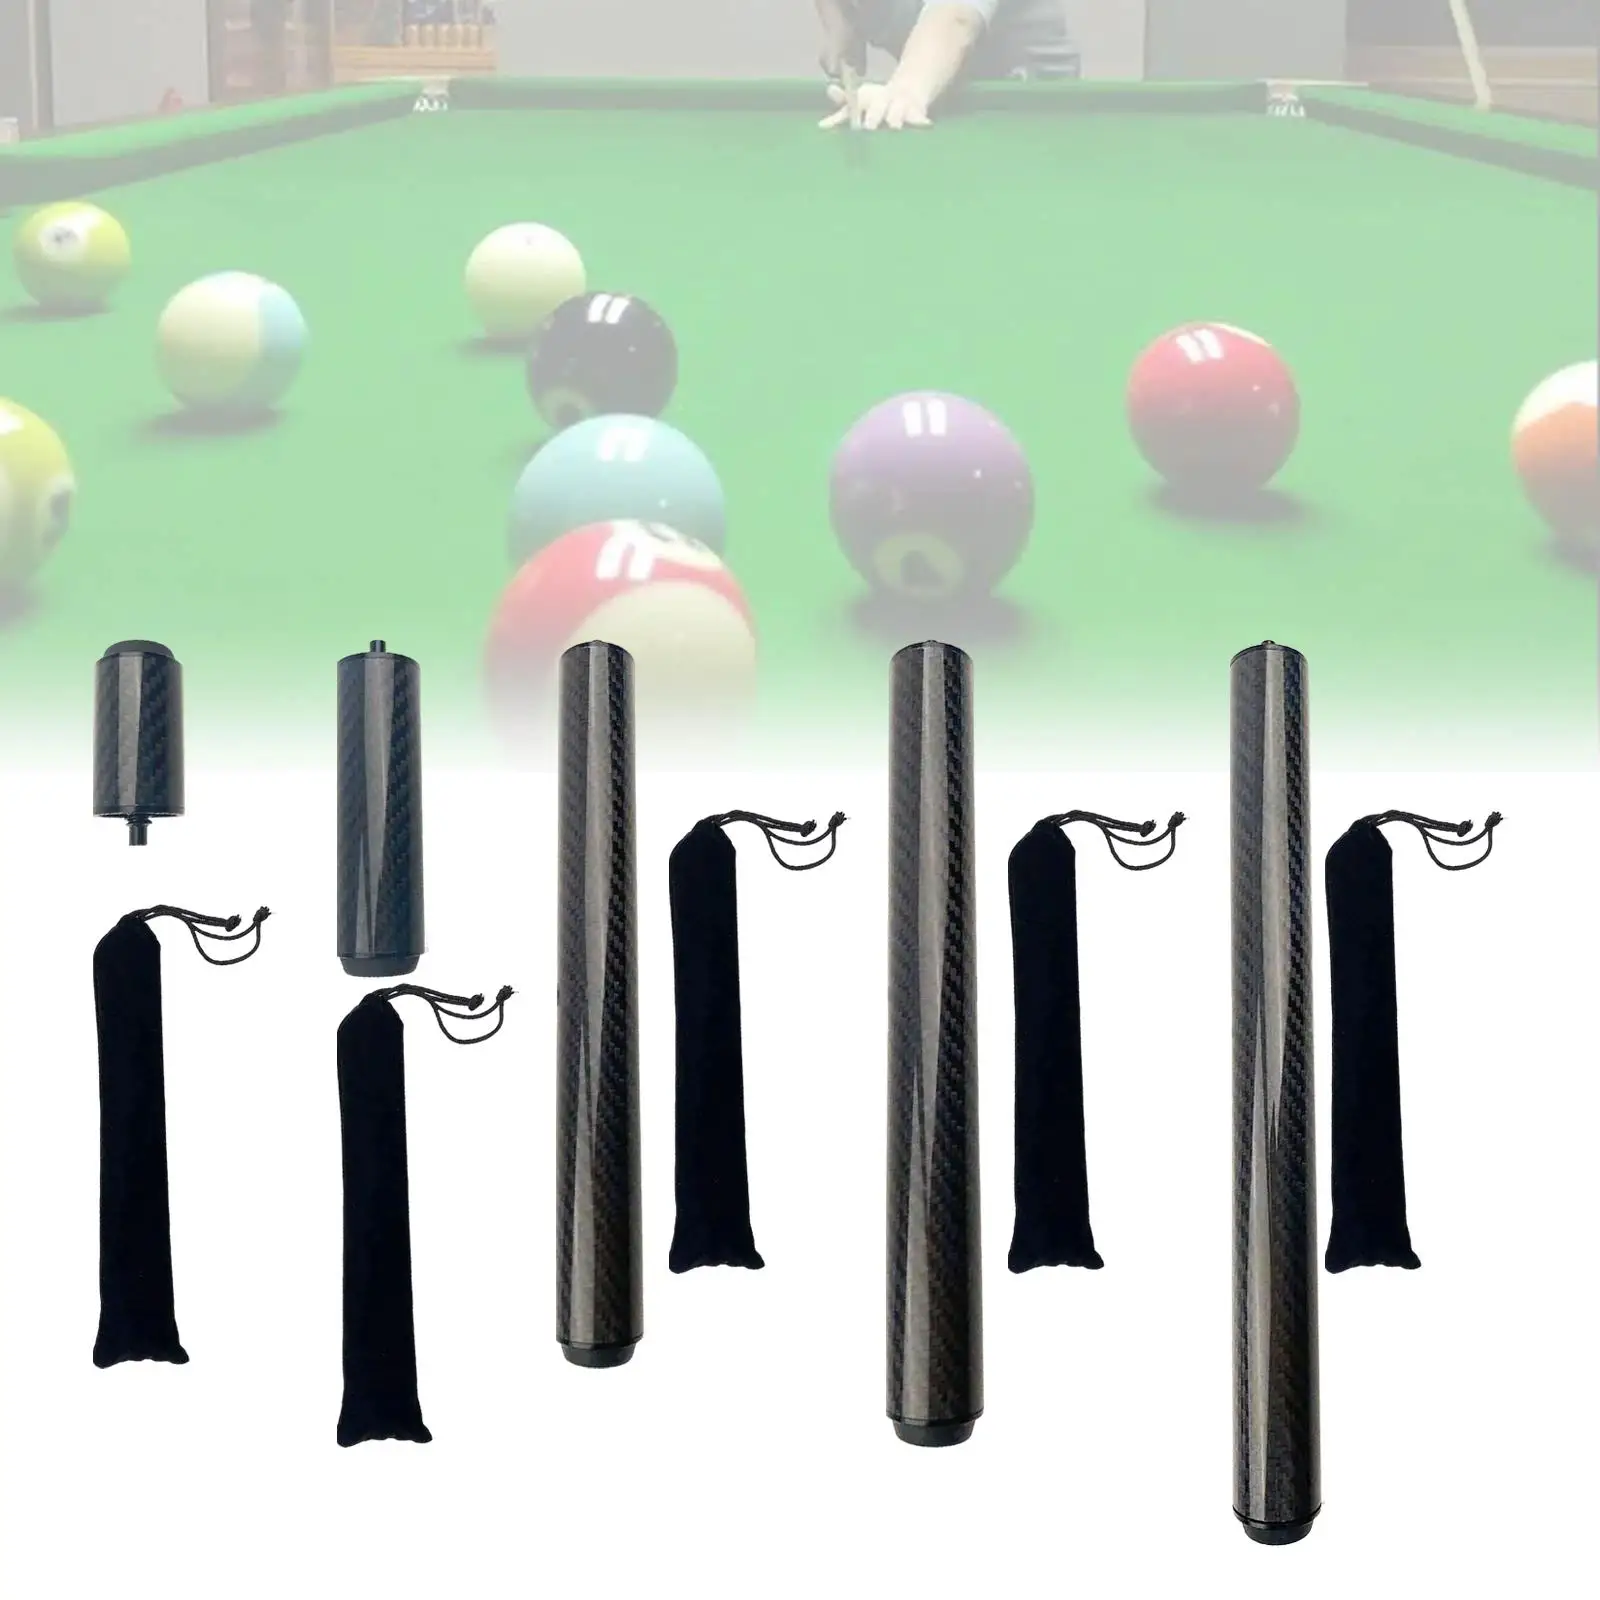 Billiards Pool Cue Extension Cue End Lengthener Cue Stick Extenders